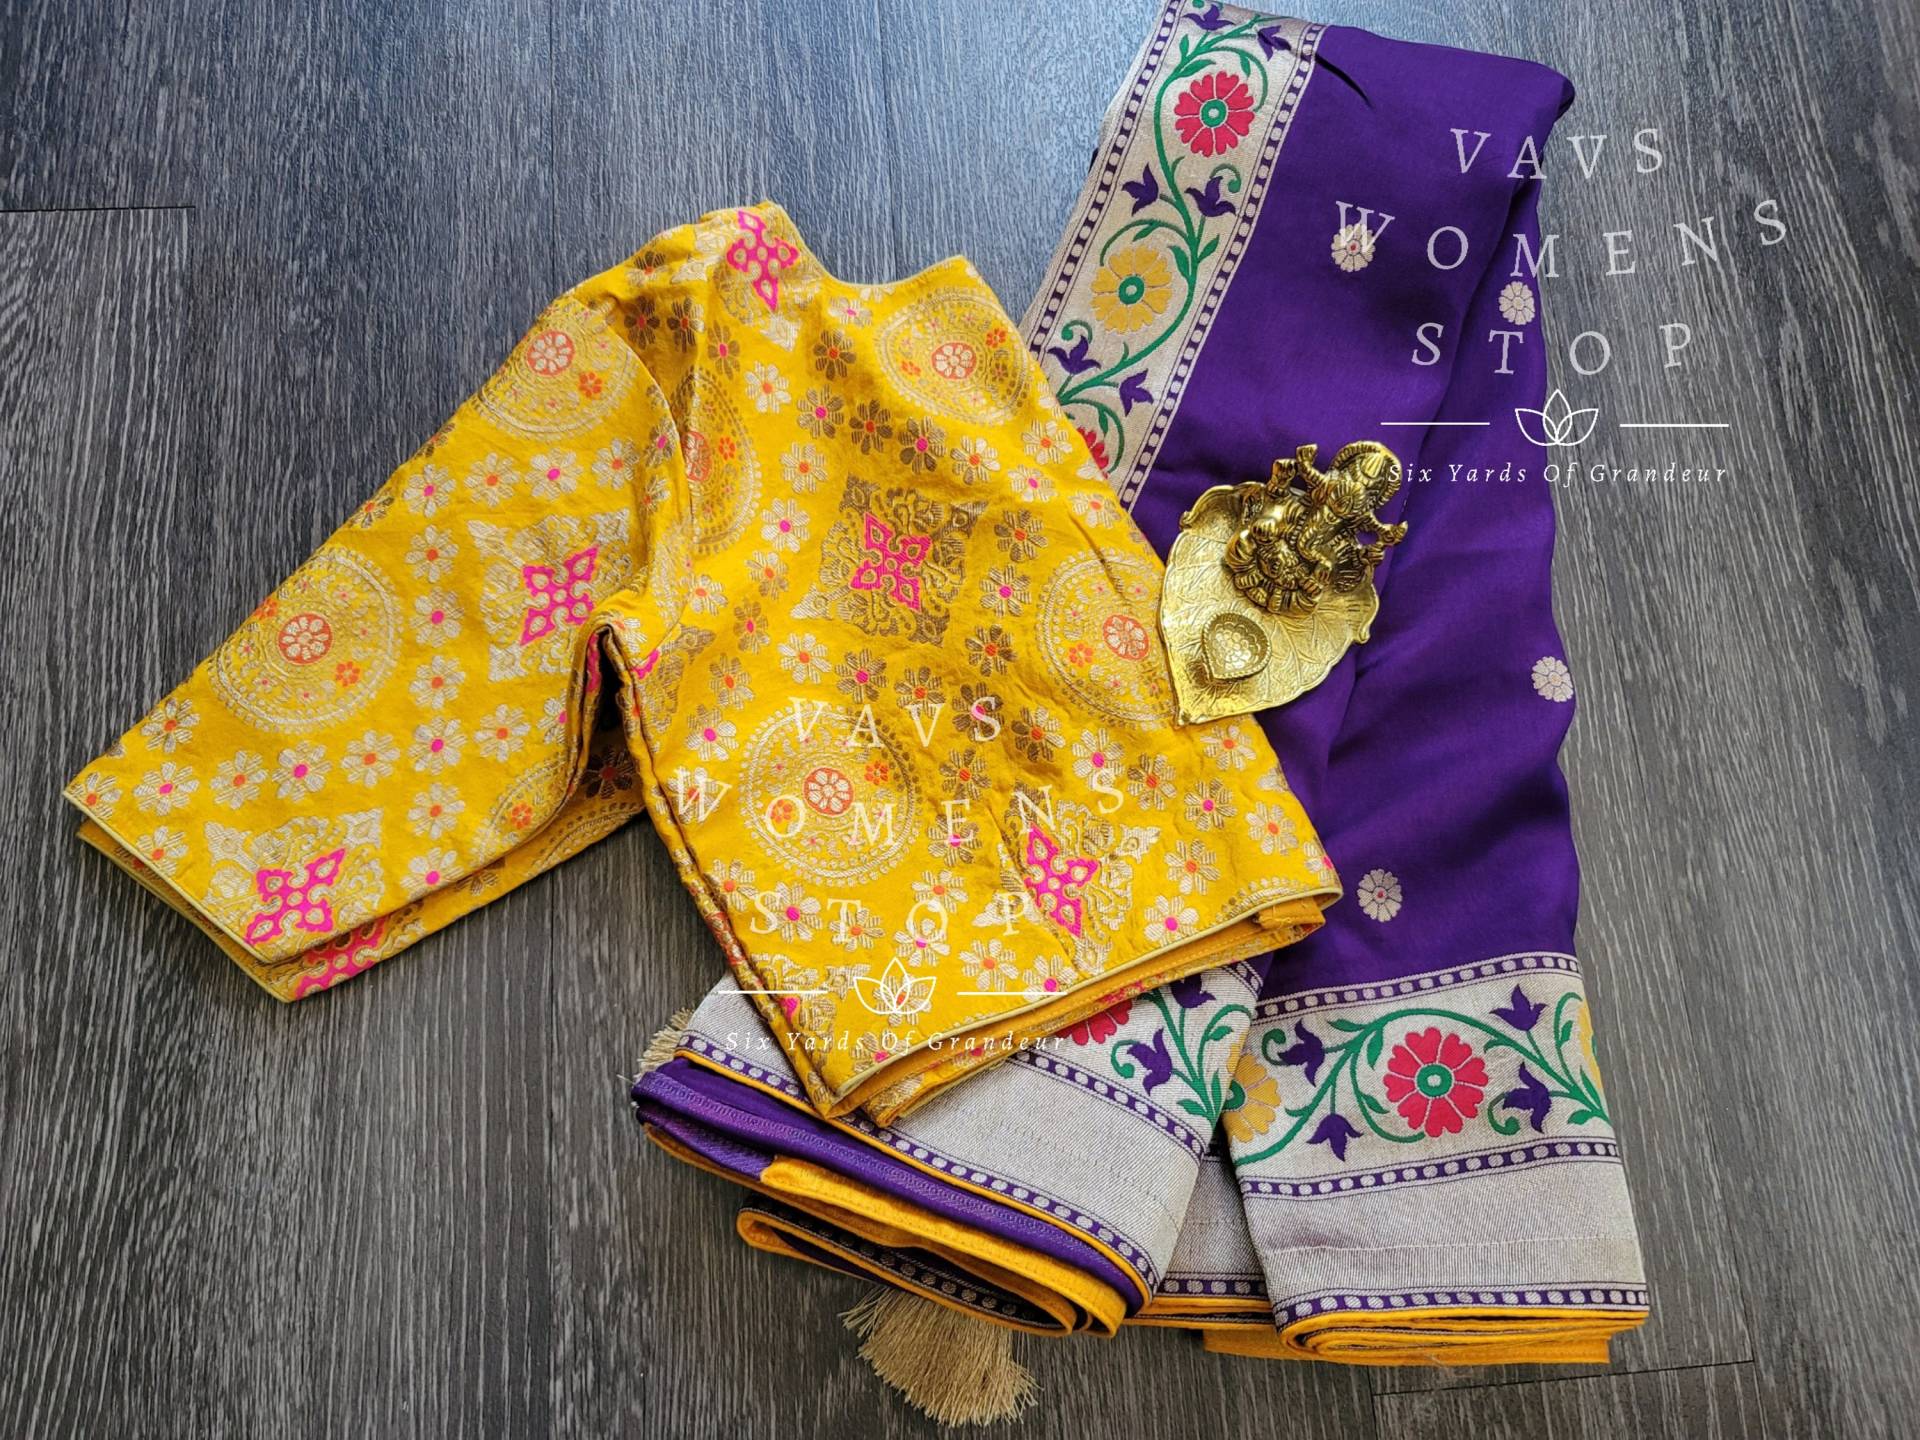 Reine Munga Benarasi Crepe Seide Paithani Saree - Bluse Größe 38 Erweitert Bis 44 Versandfertig Aus Texas, Usa Vavs Womens Stop von VAVSWomensStop